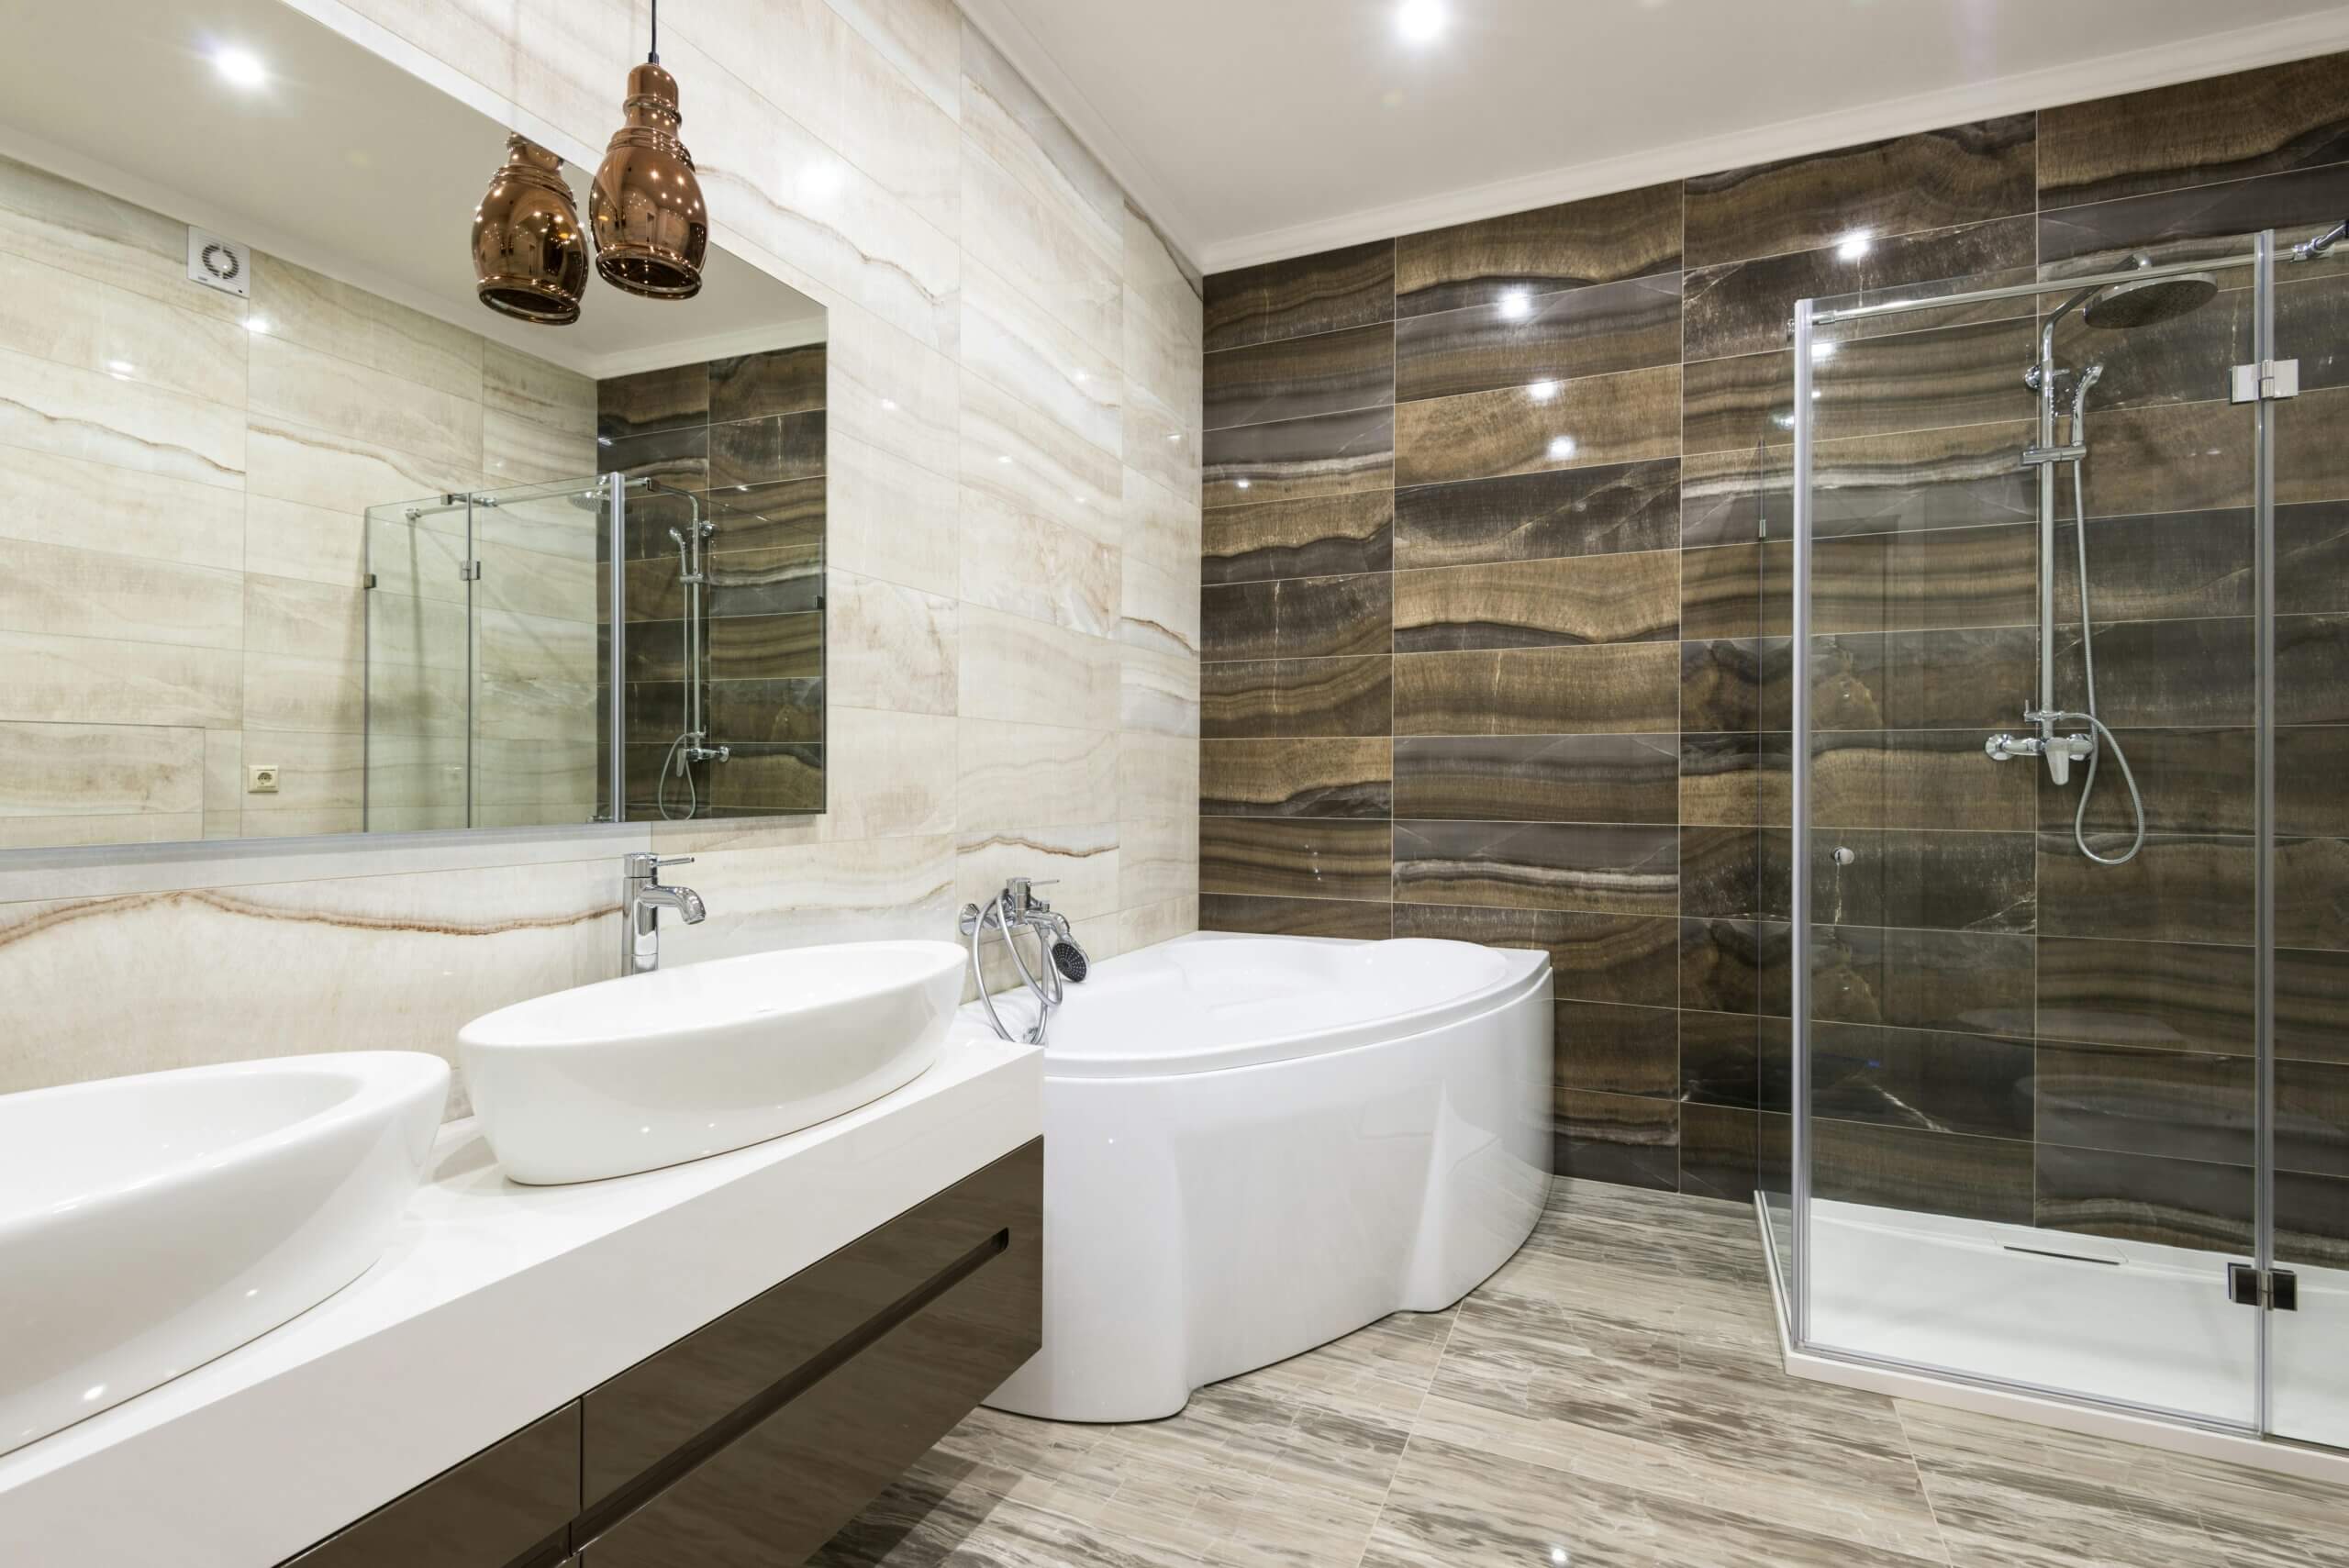 Modern bathroom with energy-efficient fixtures